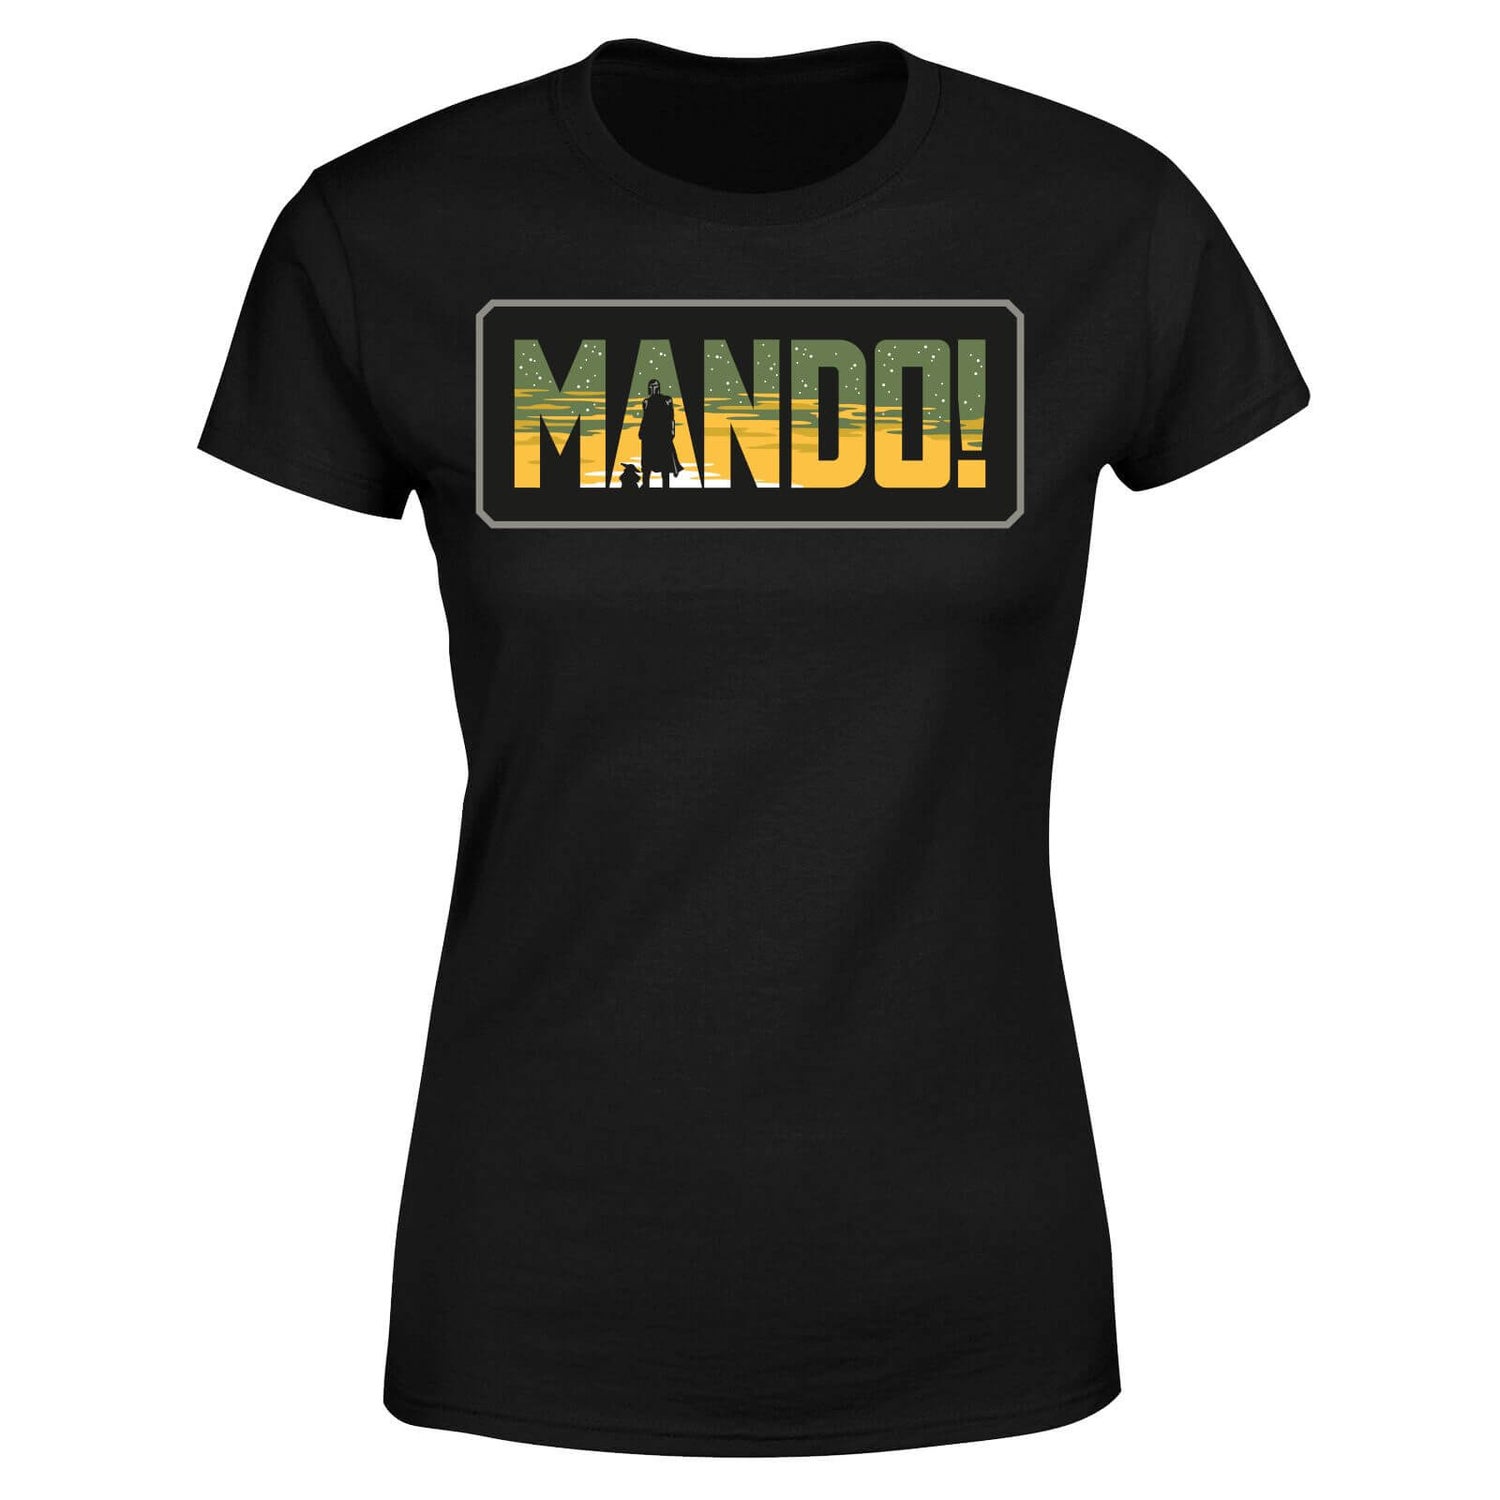 Star Wars The Mandalorian Mando! Women's T-Shirt - Black